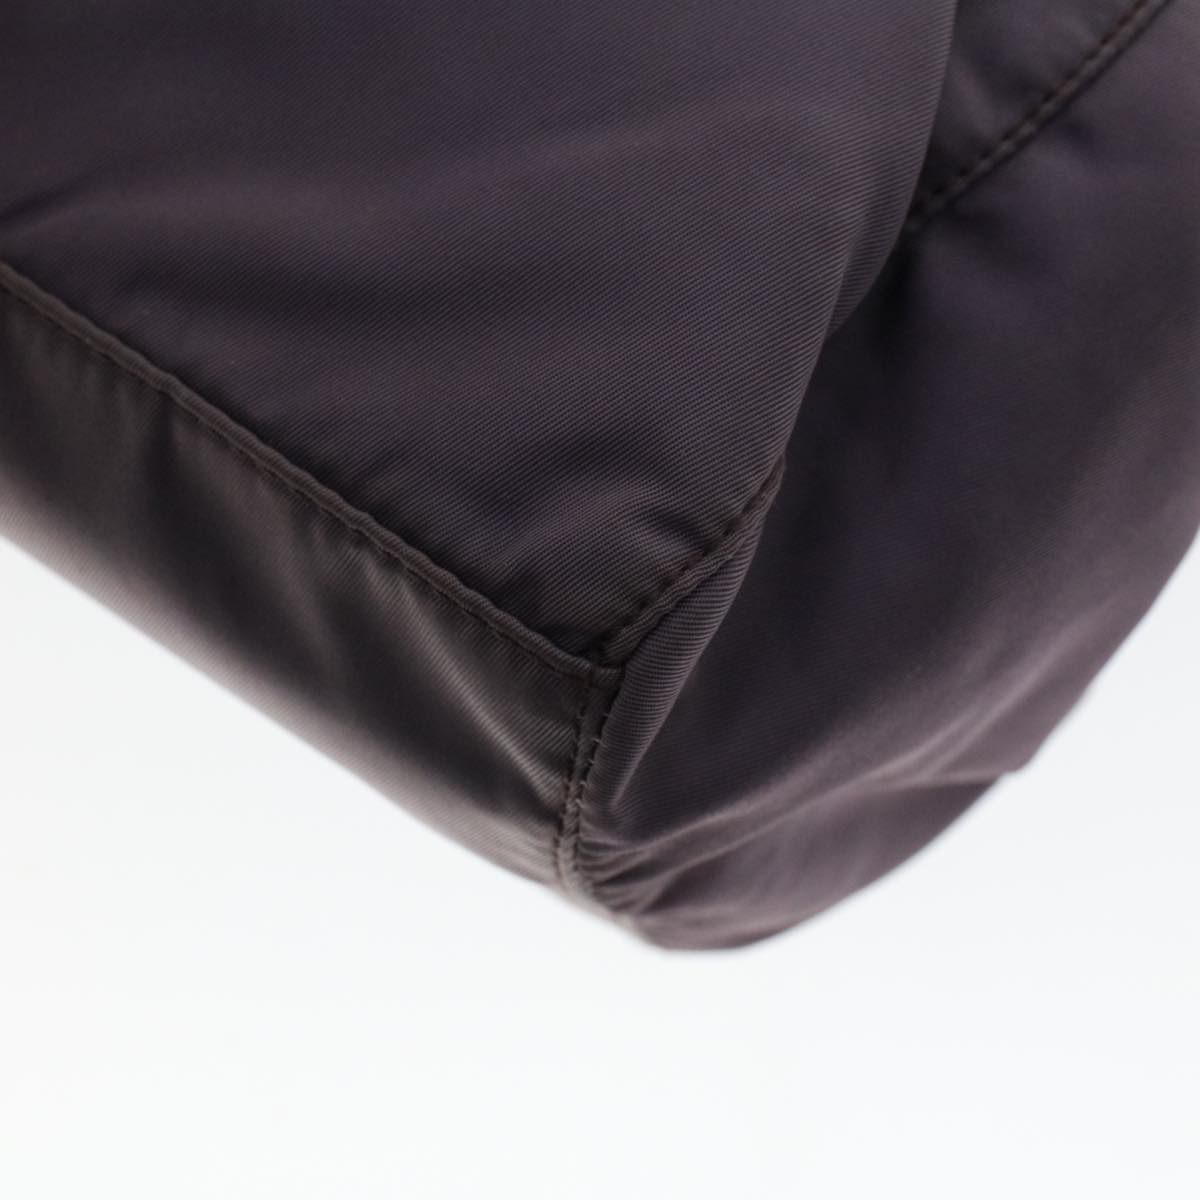 PRADA Hand Bag Nylon 2way Shoulder Bag Purple Auth bs6343